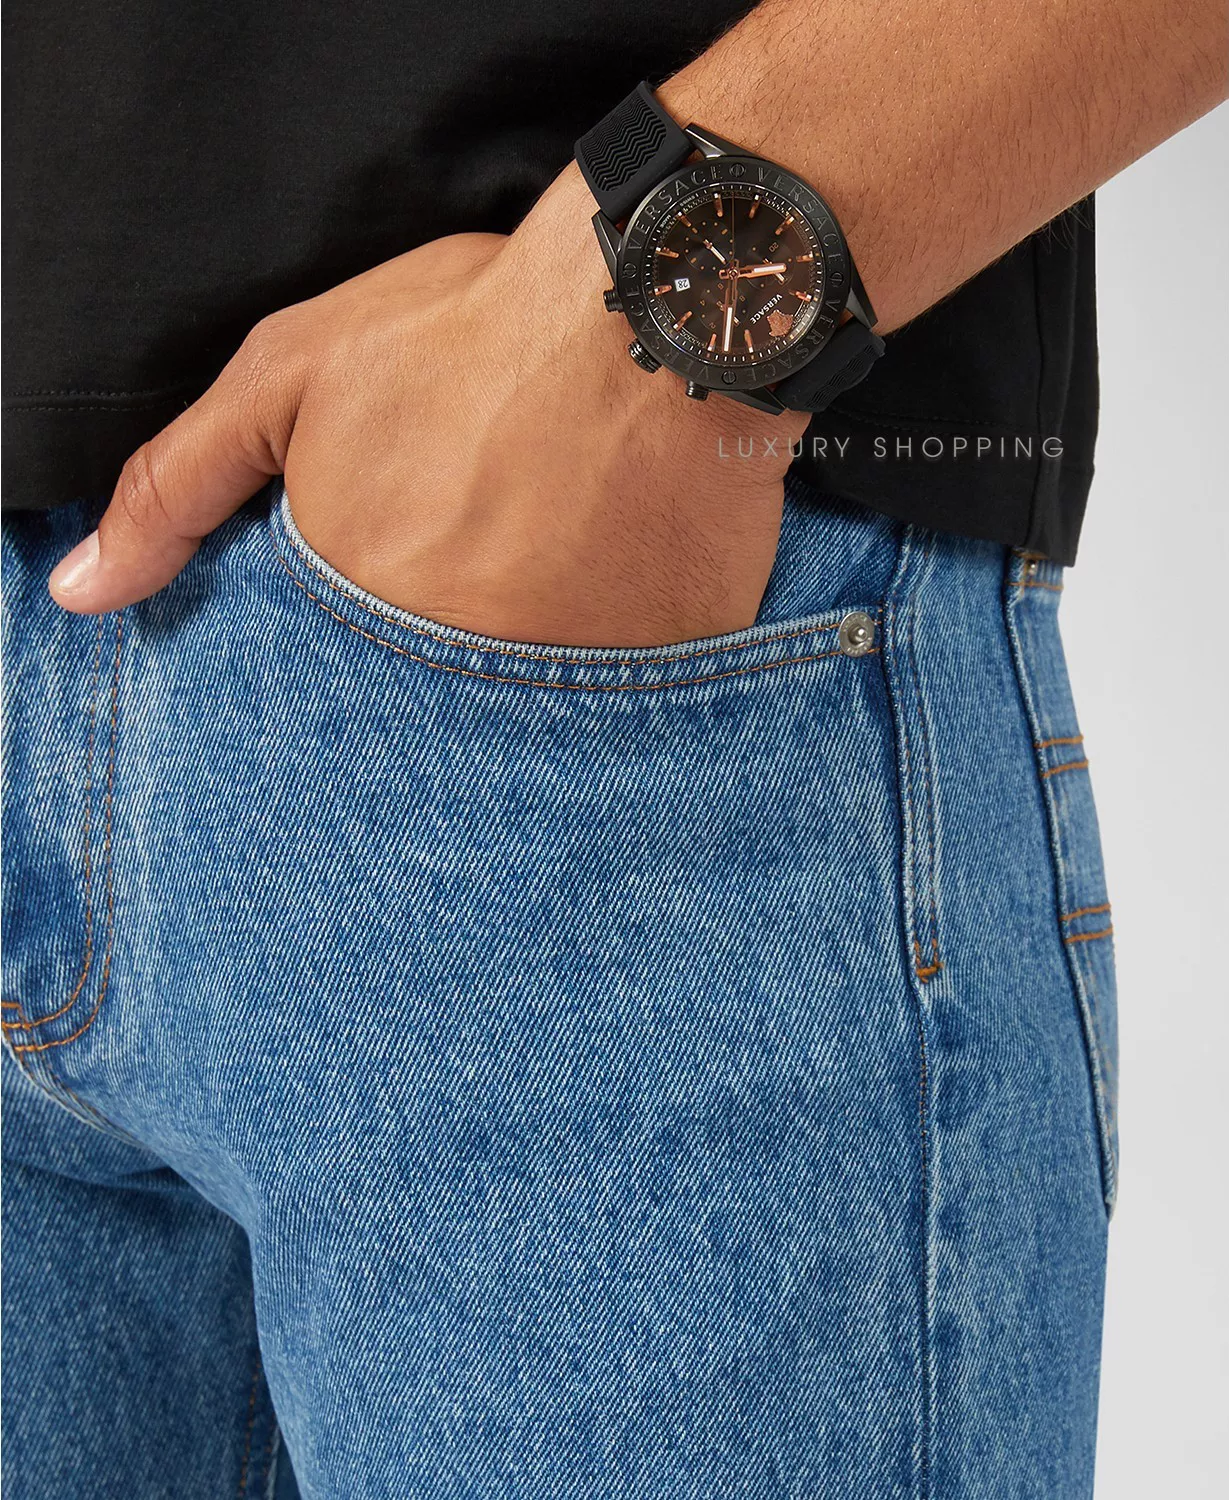 Versace V-Chrono Swiss Watch 44mm